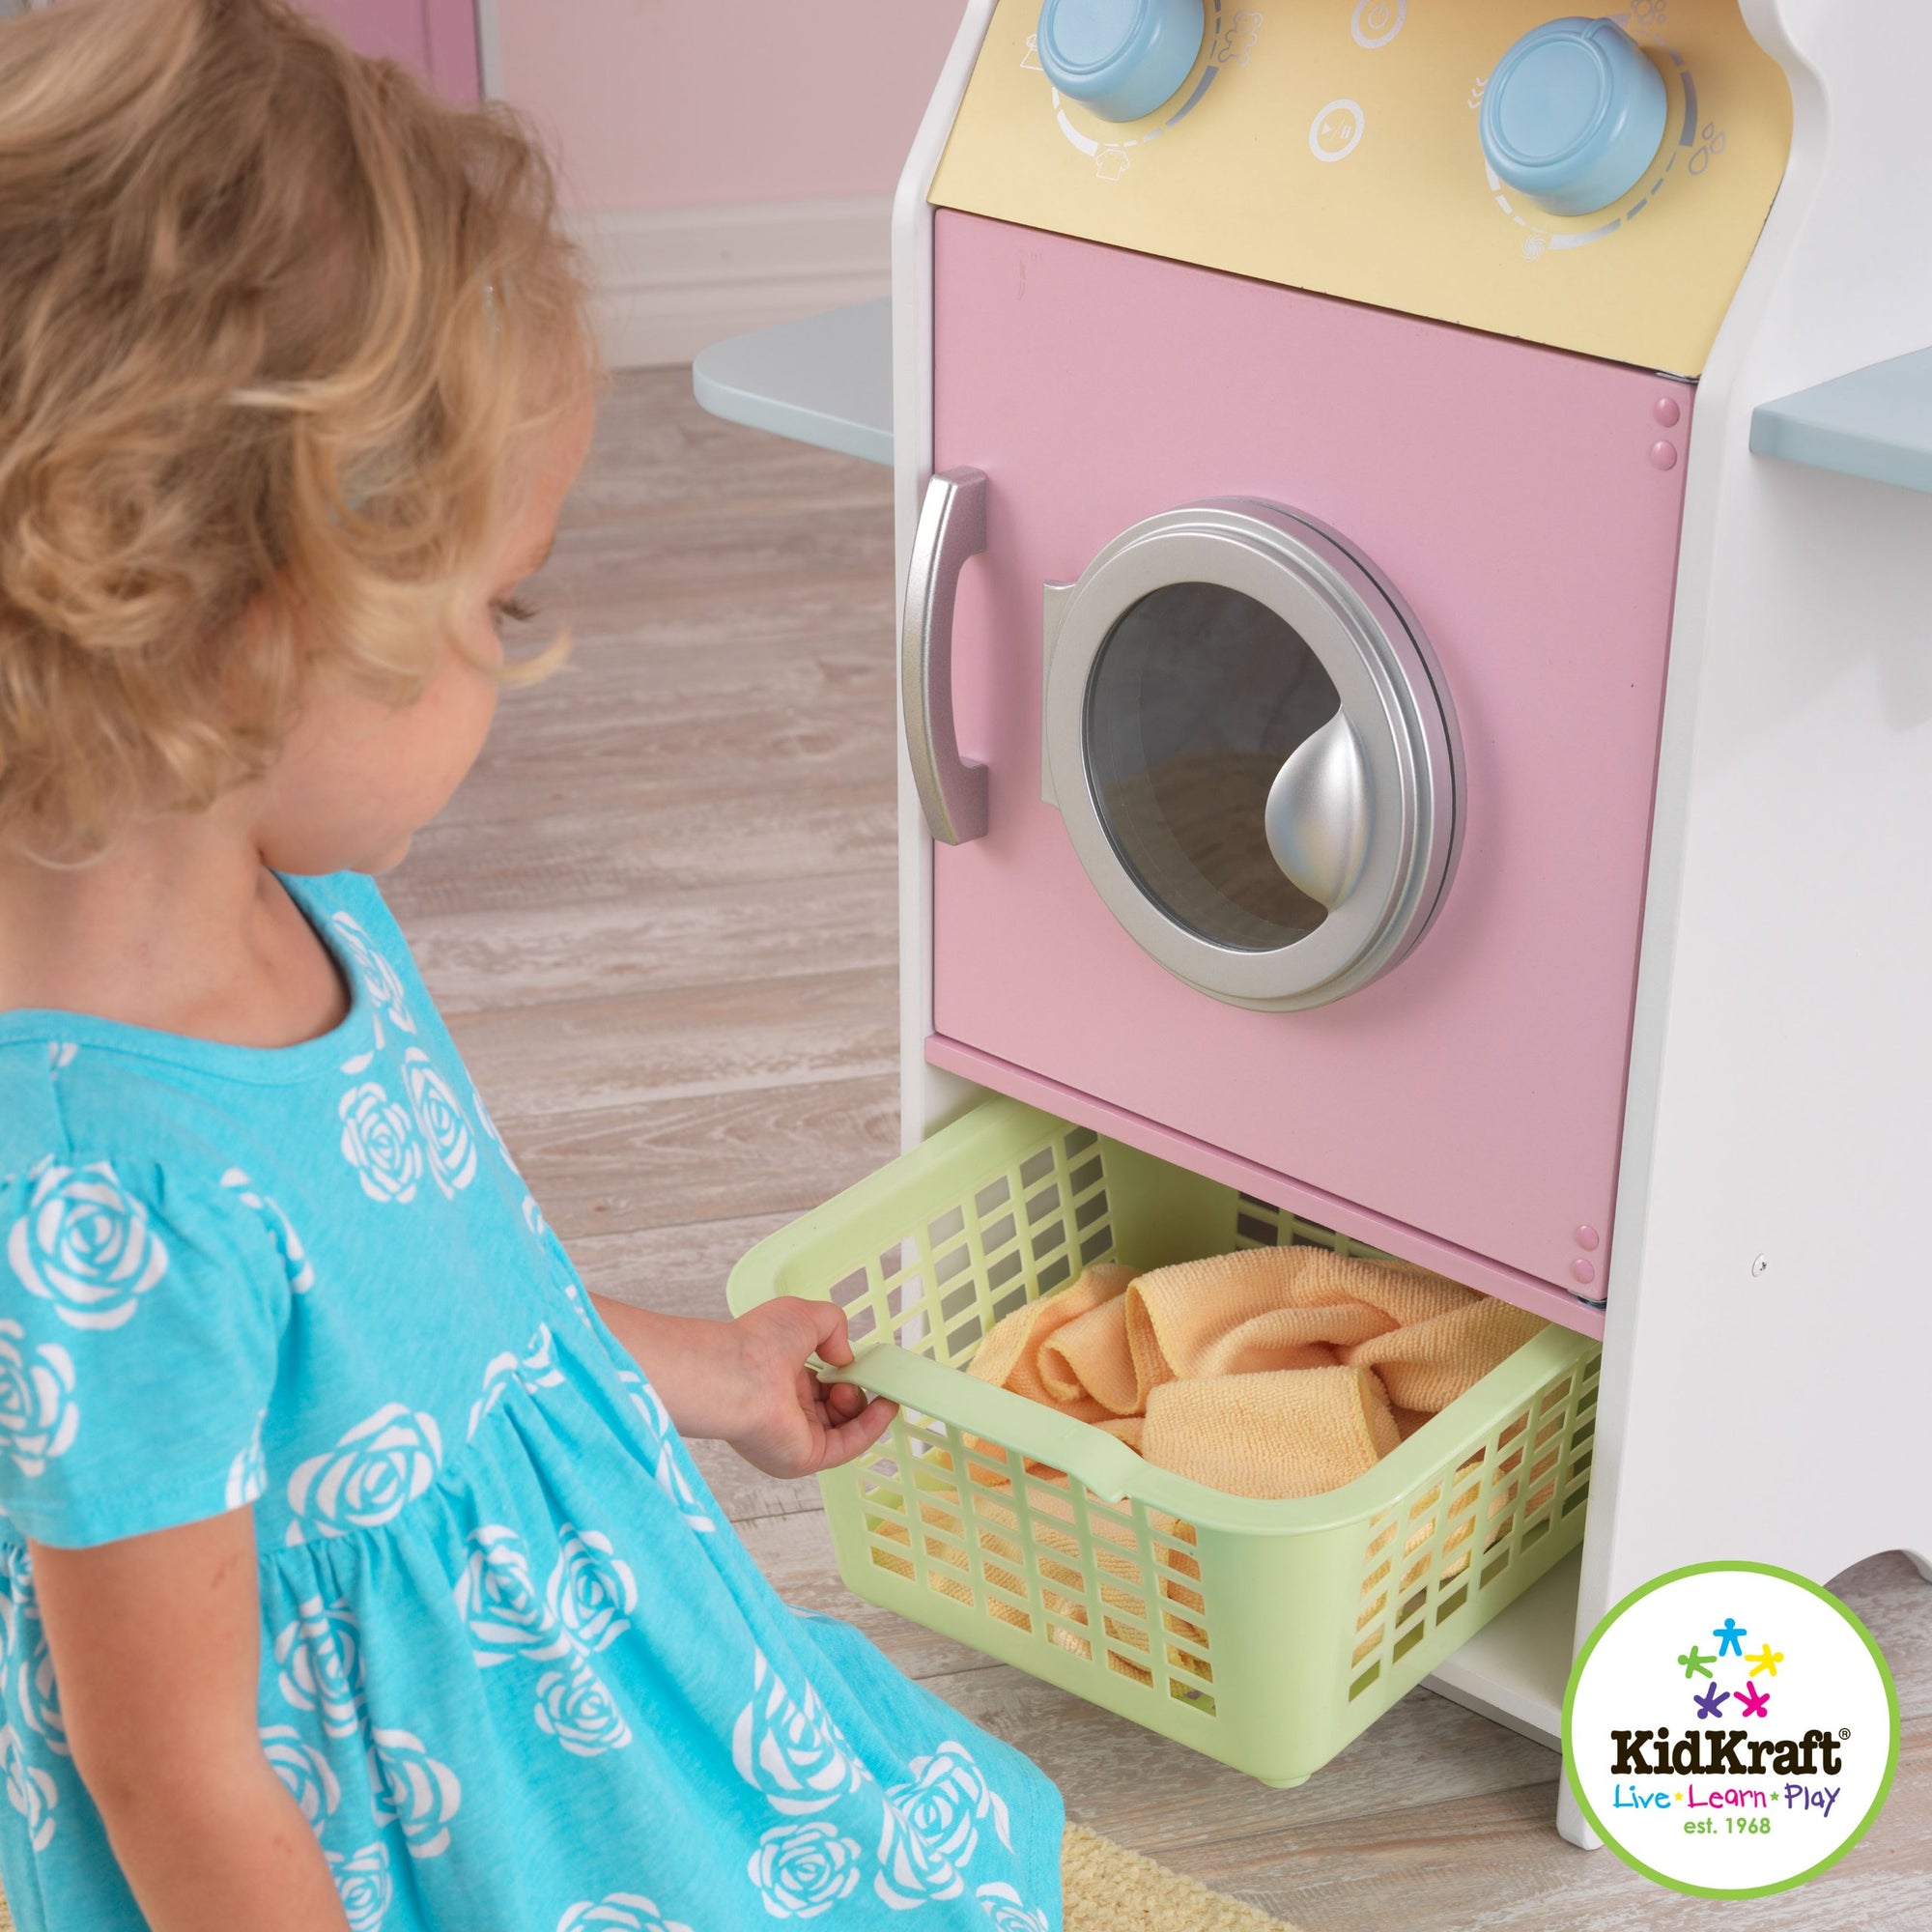 KidKraft Laundry Children's Pretend Play Wooden Stacking Washer